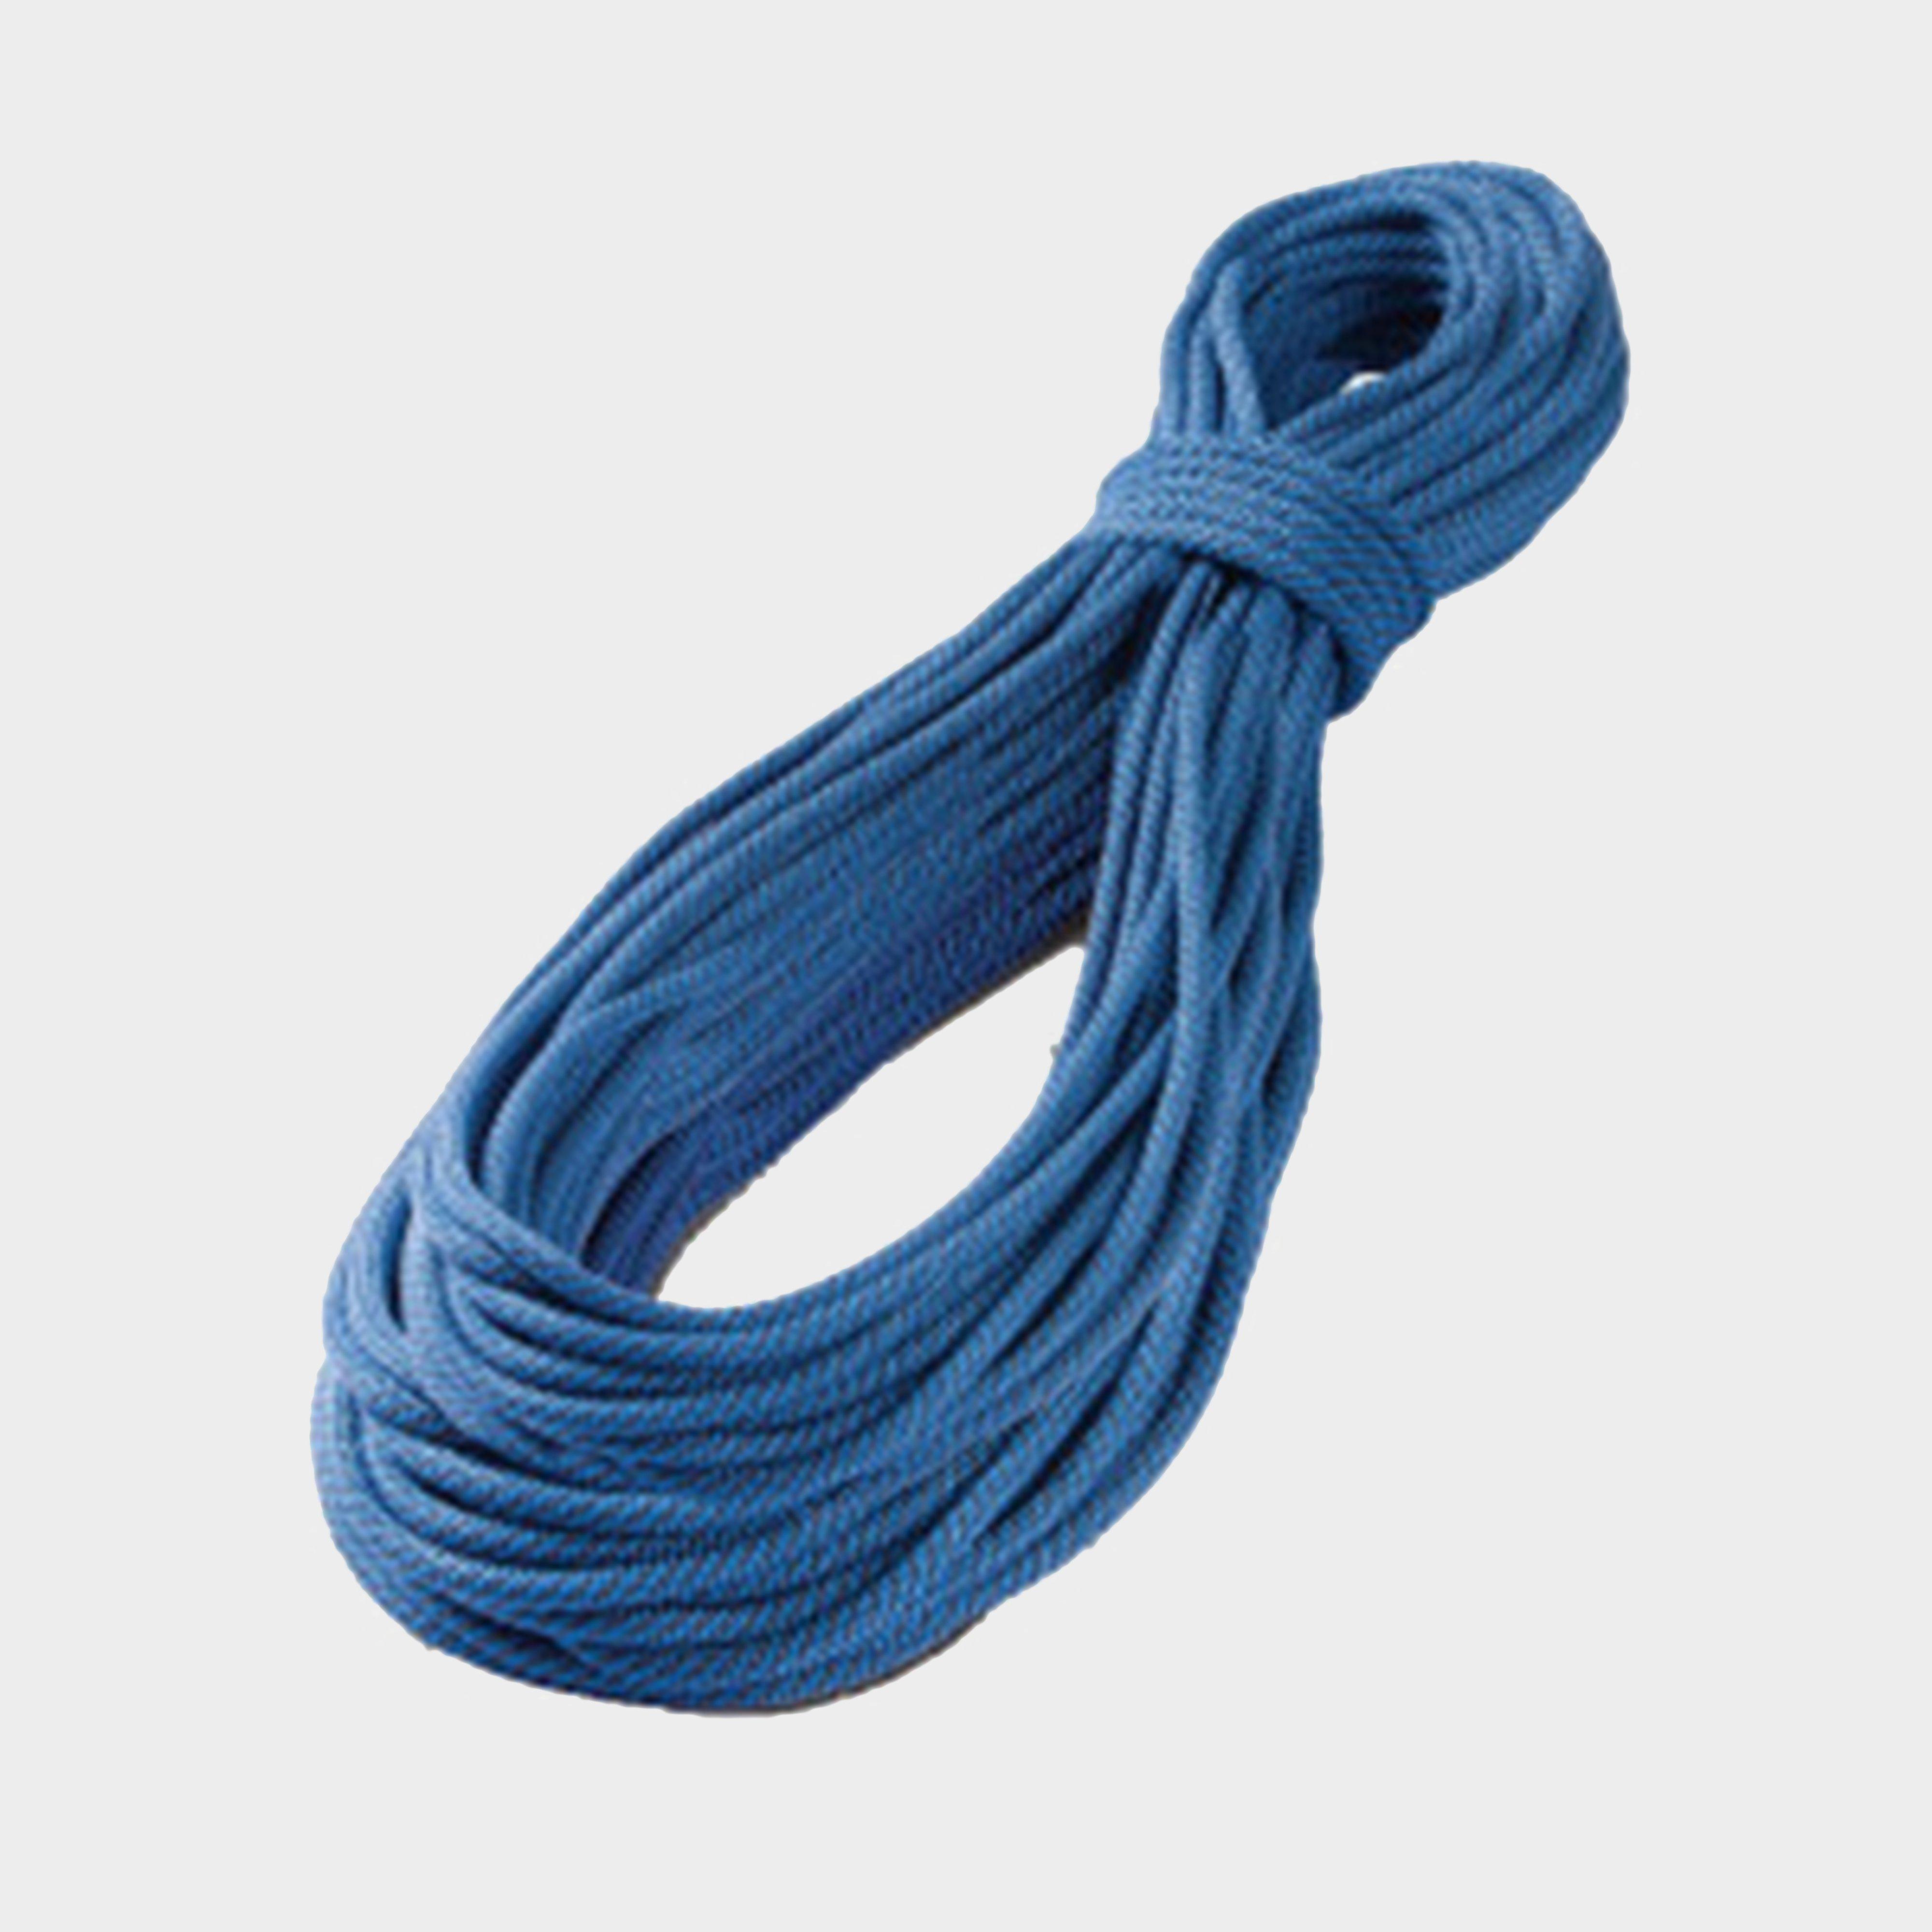 Tendon Master Rope 7.8 50m - Blue  Blue